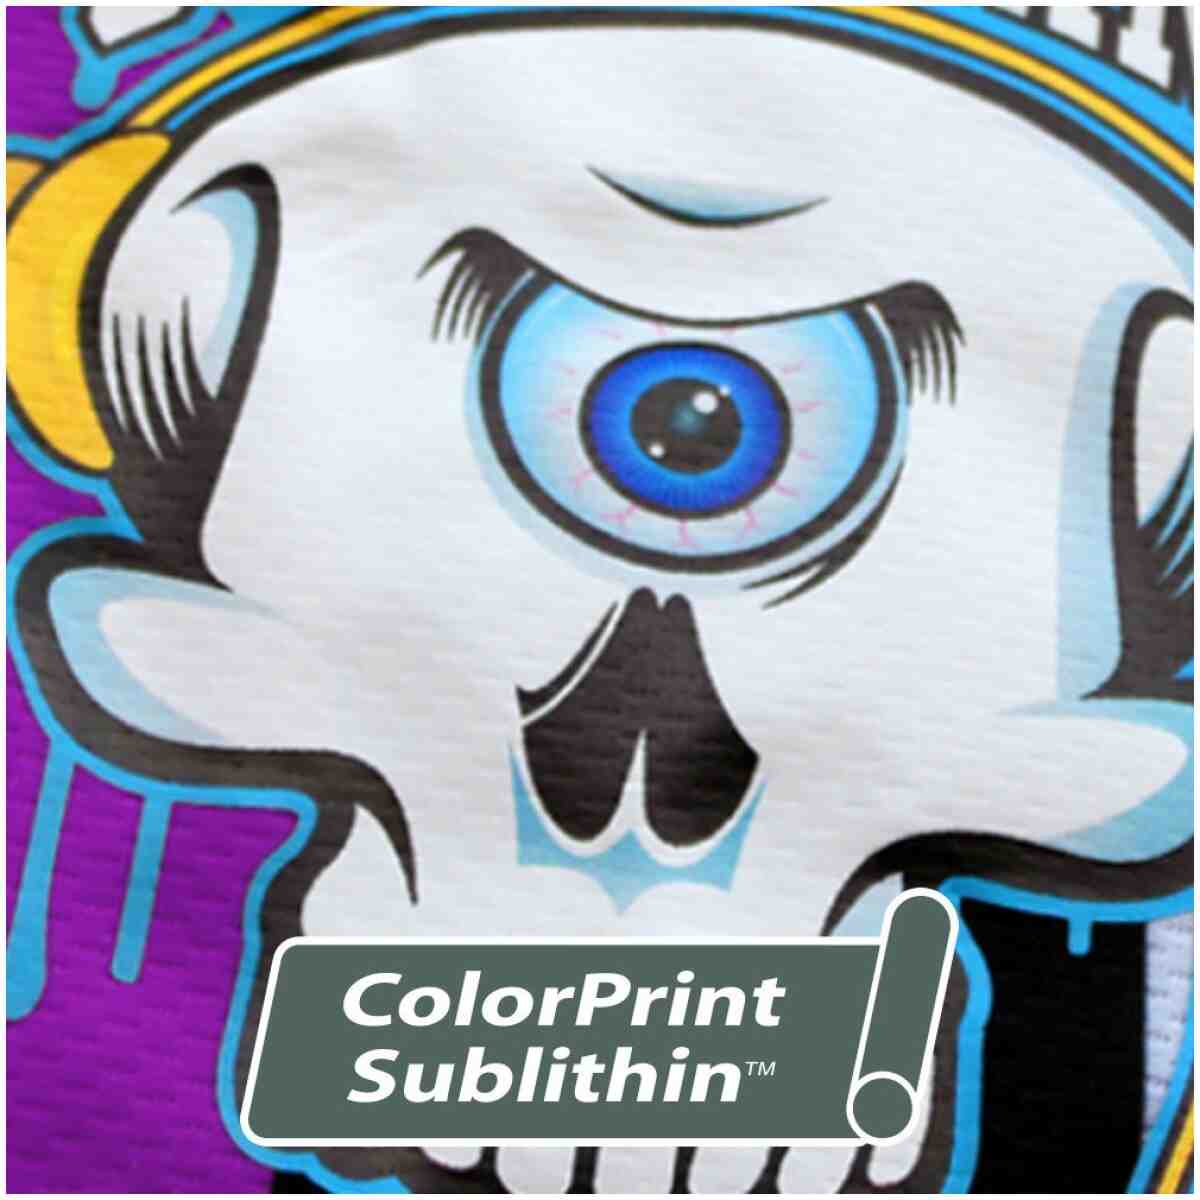 Colorprint™ Sublithin 29.5" SISER®